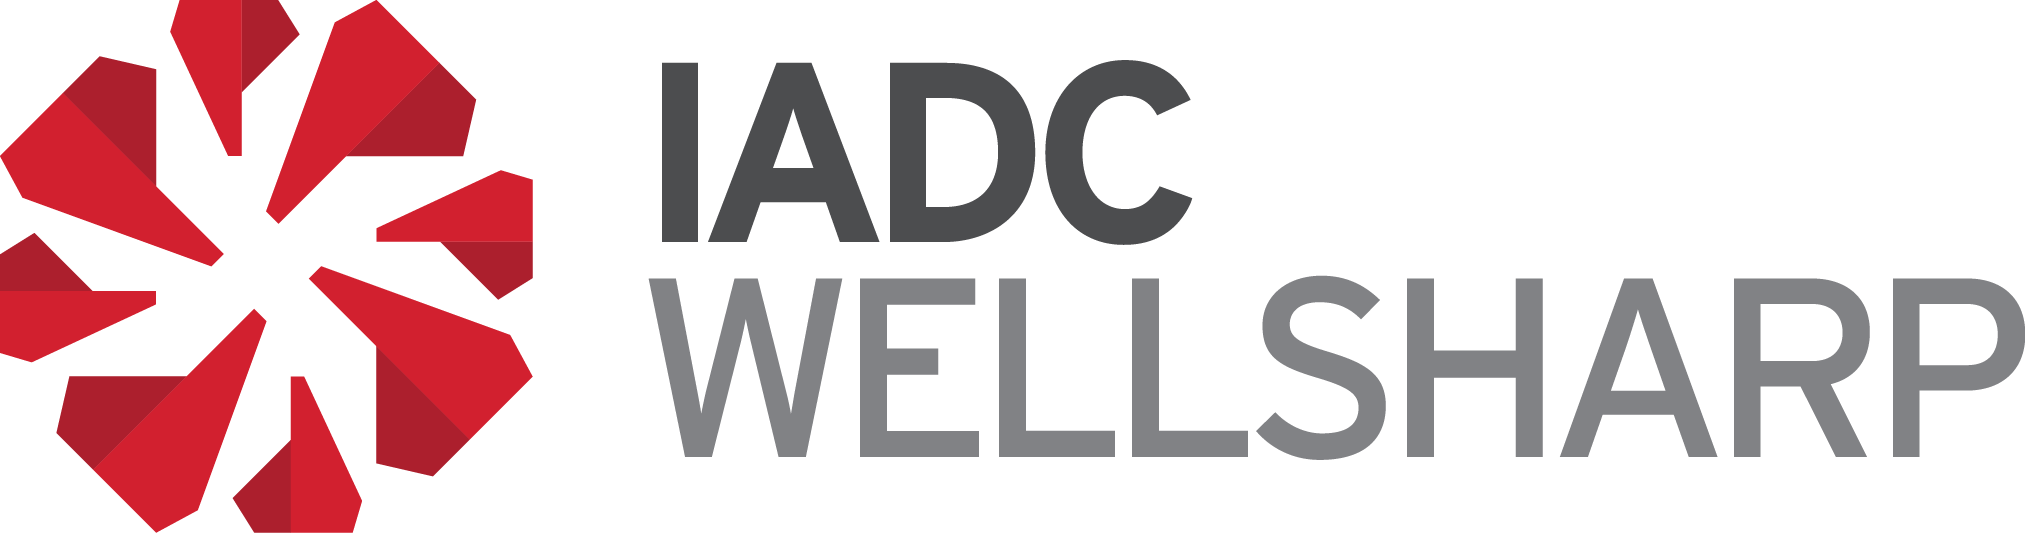 IADC Wellsharp